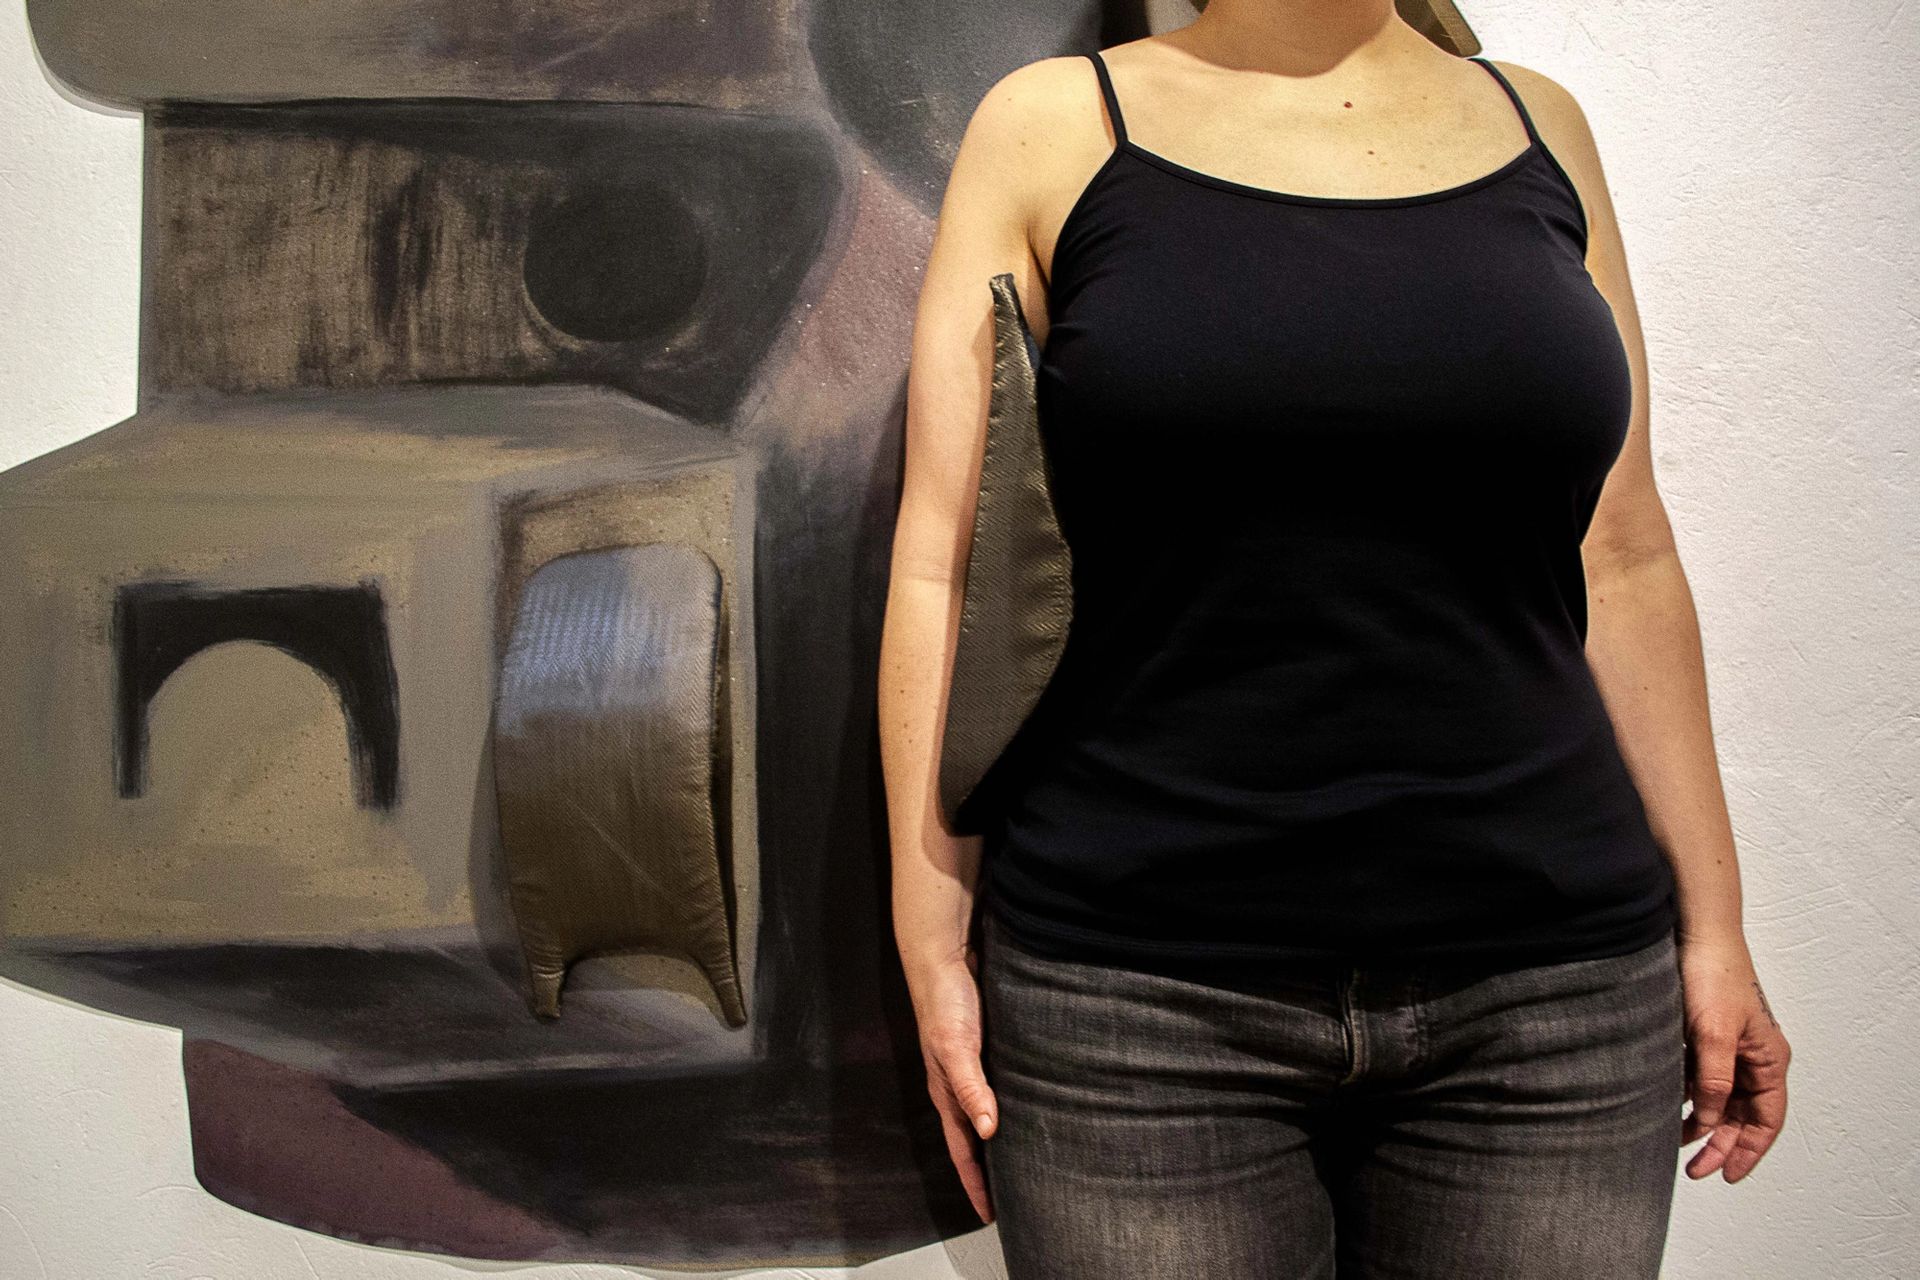 Ana Navas, Waist Pad (after Moore) (Detail), 2018,  pvc, acrylic, fabric, foam, plastic,140 × 100 cm